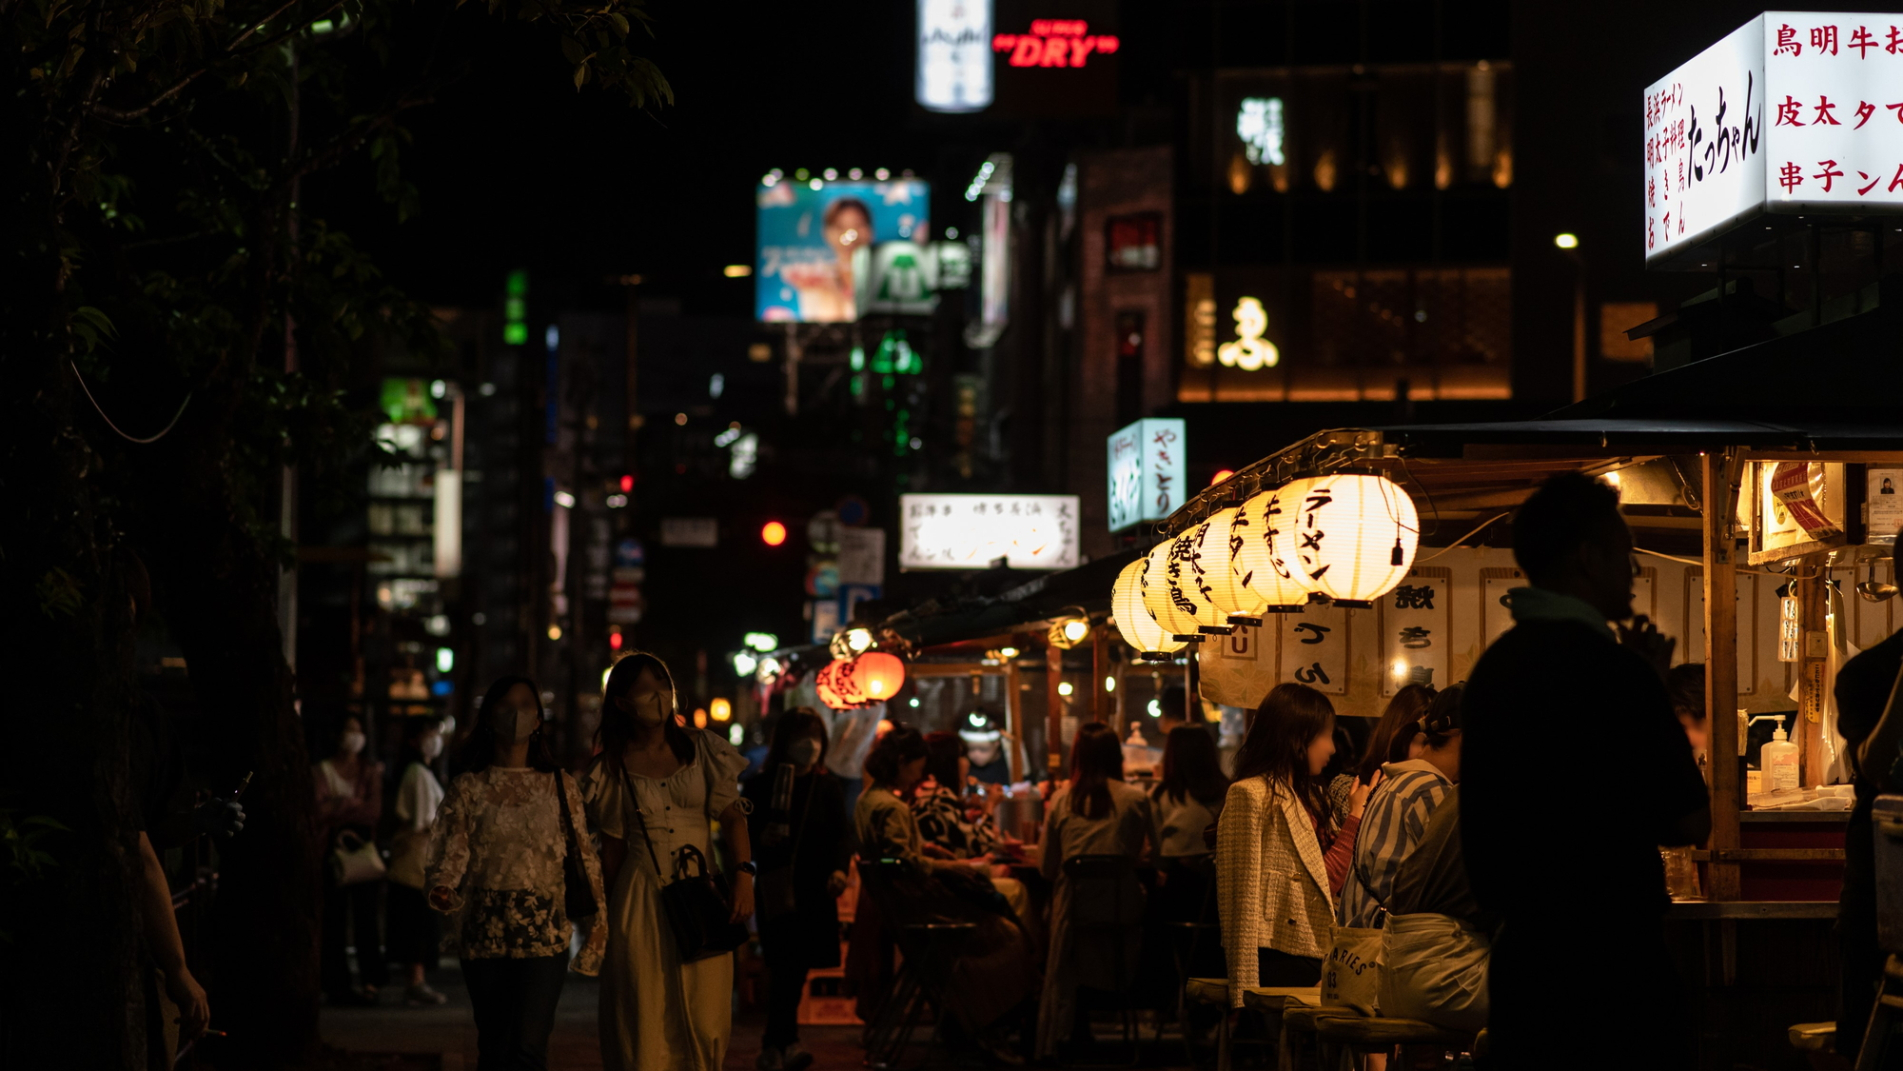 Night scene of a food stall street in Nakasu